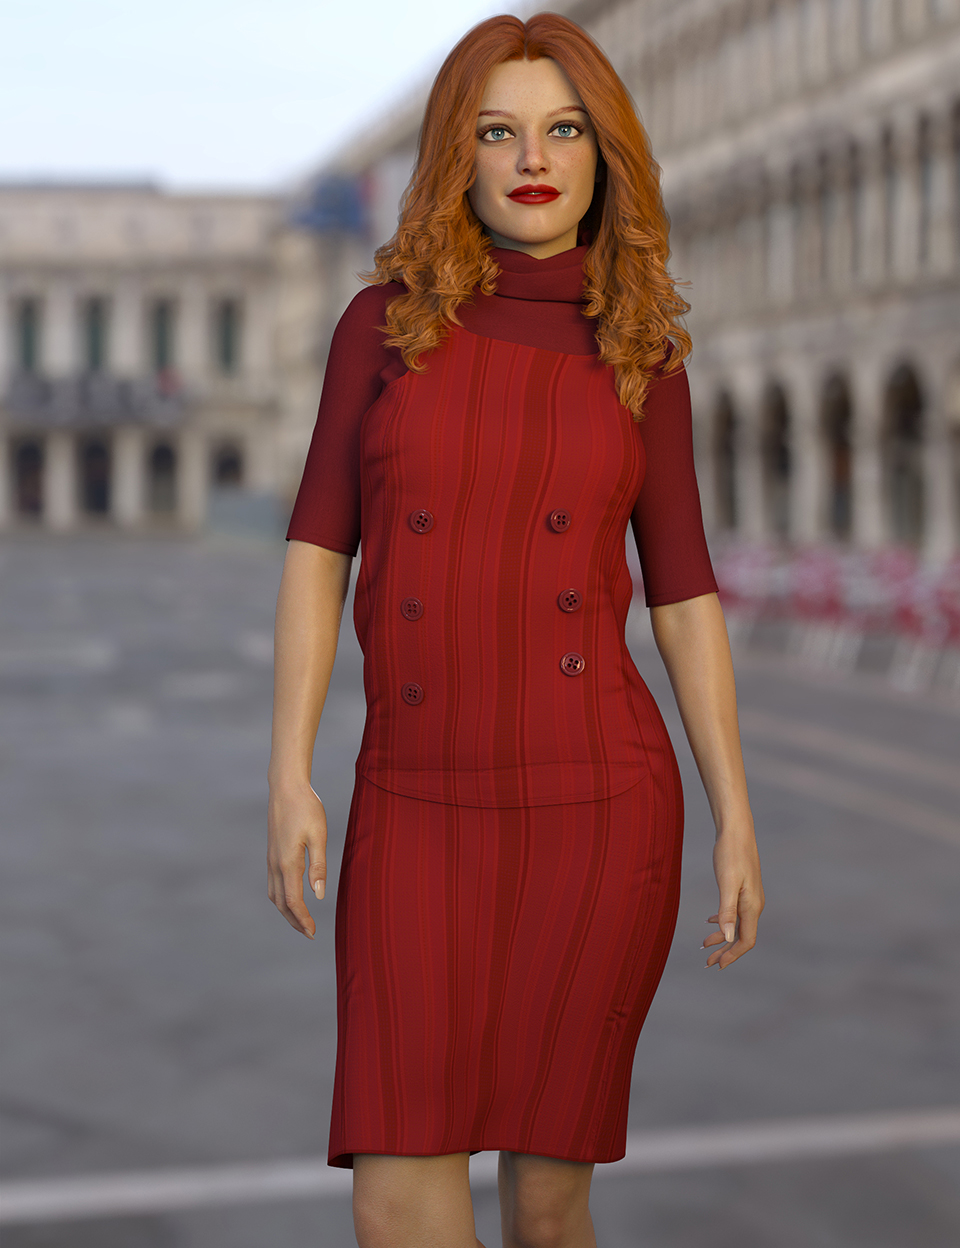 dForce Azul Outfit for Genesis 8 Females by: Nelmi, 3D Models by Daz 3D